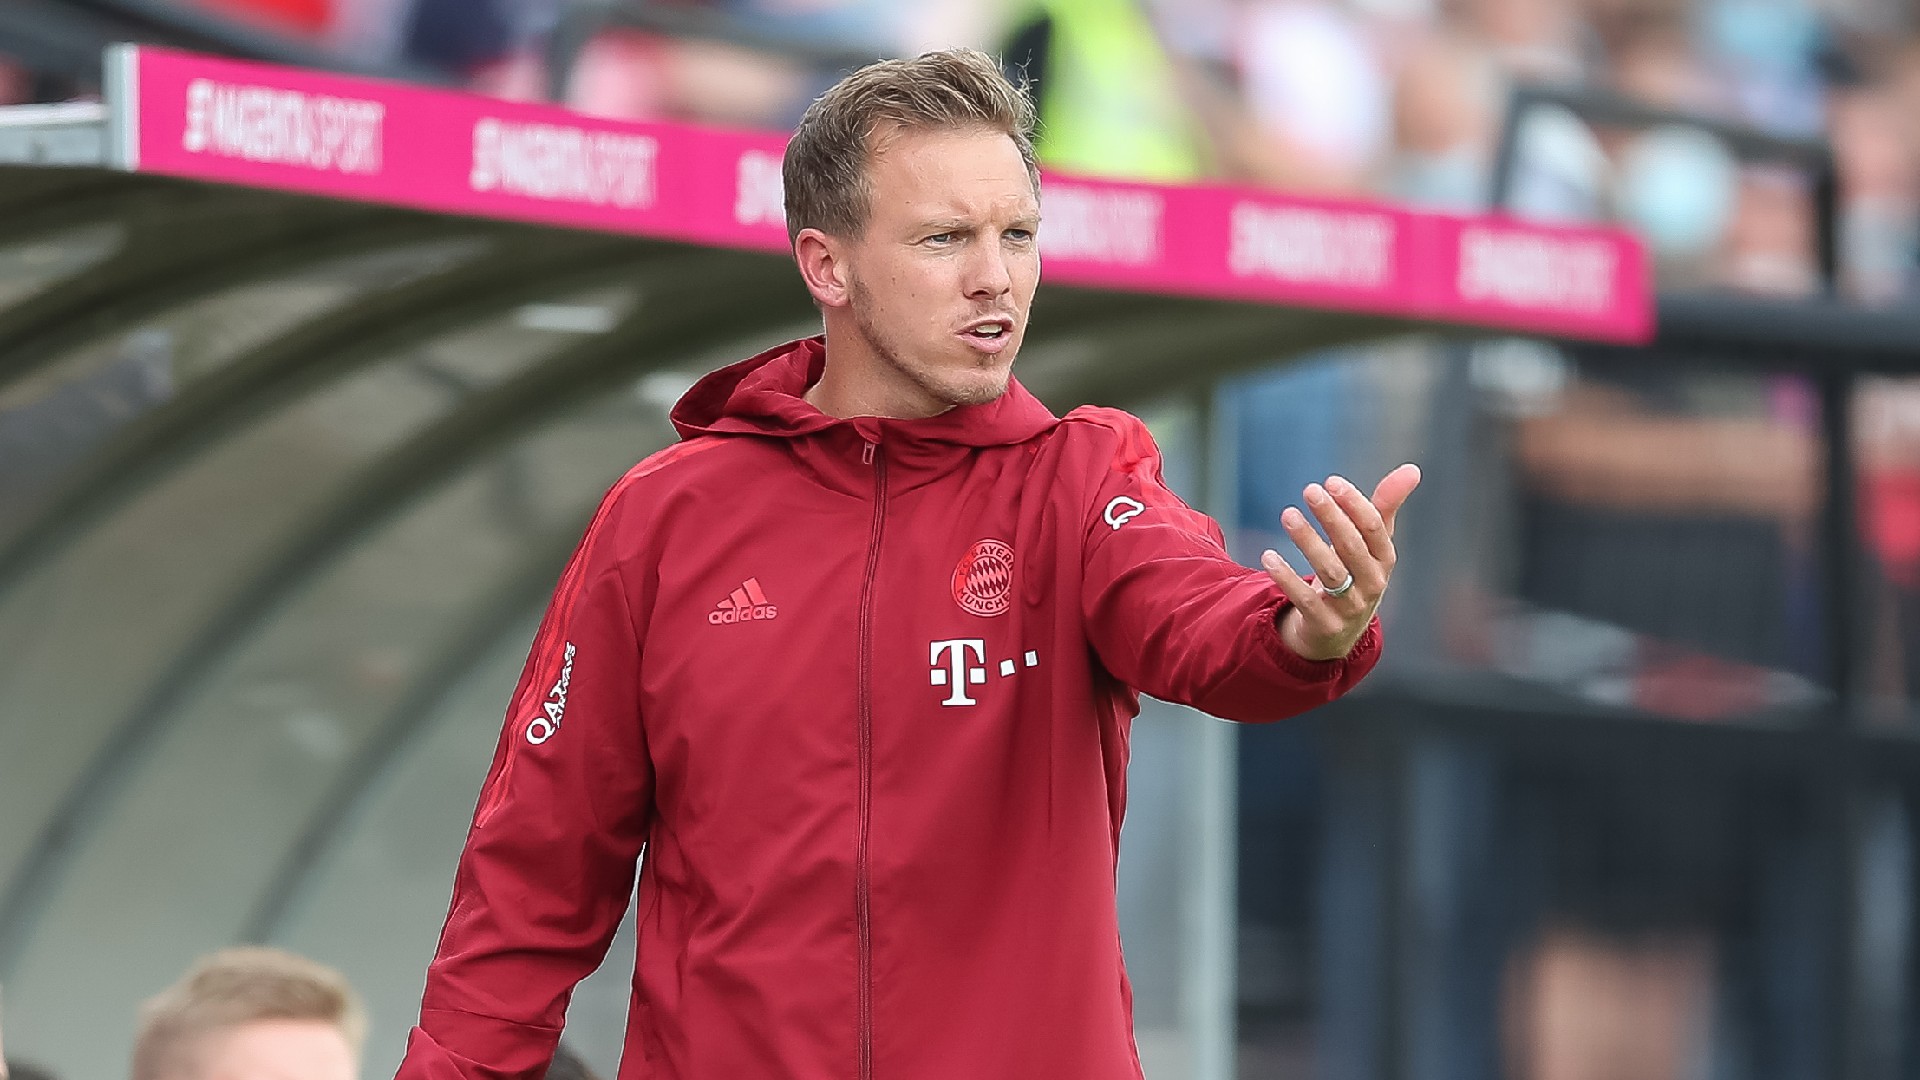 Défaite du Bayern face à Gladbach, Nagelsmann exprime sa frustration